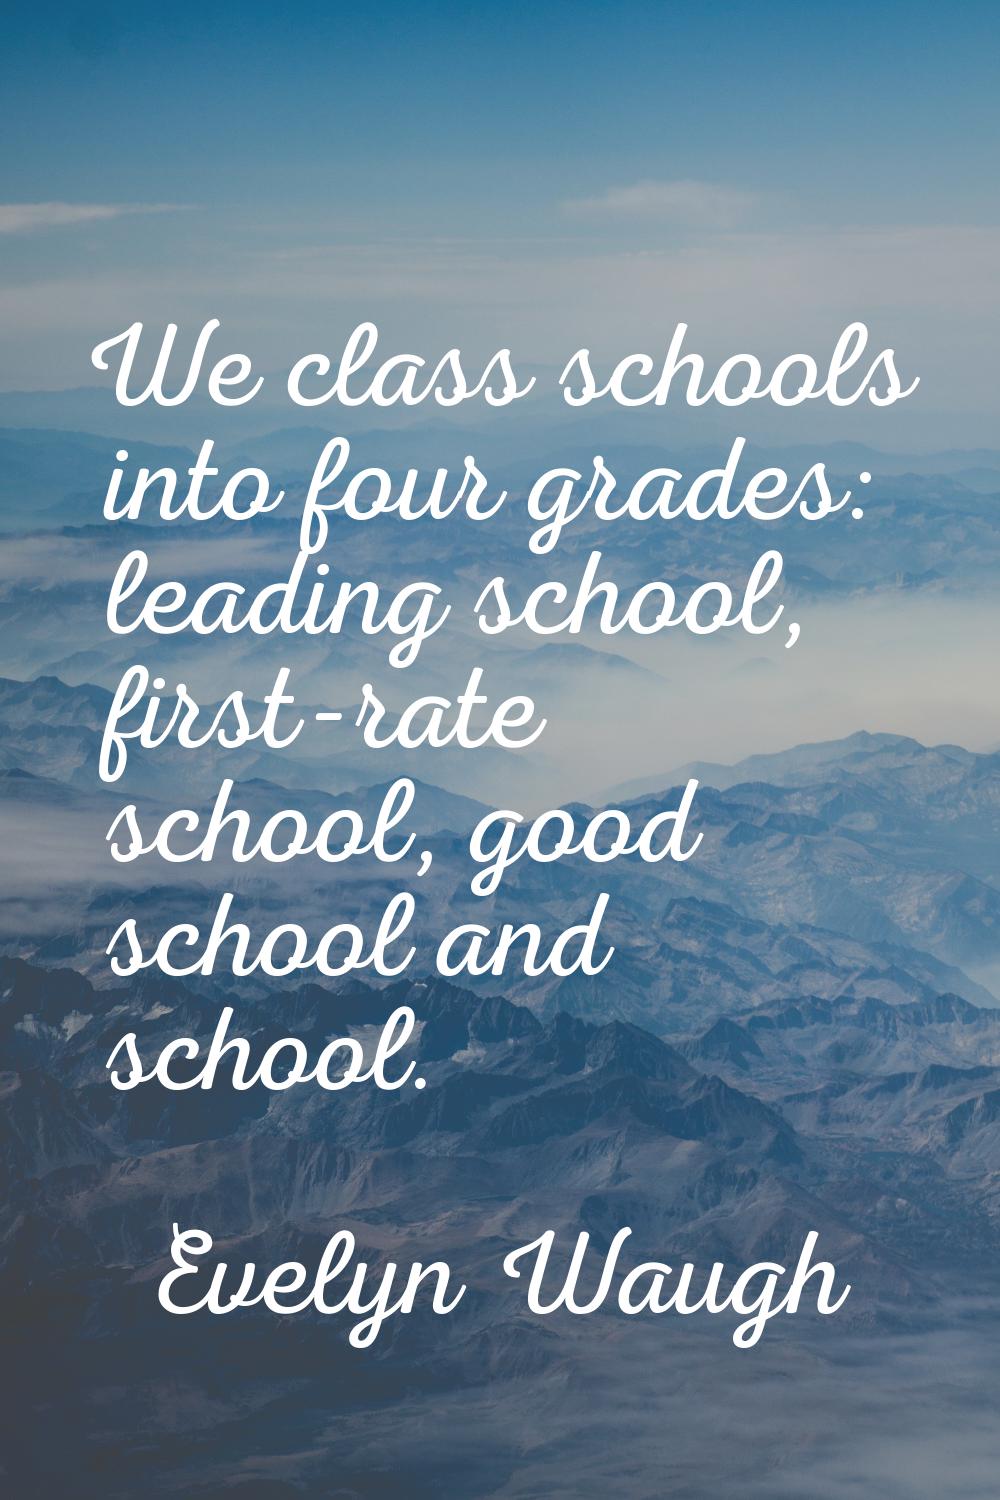 We class schools into four grades: leading school, first-rate school, good school and school.